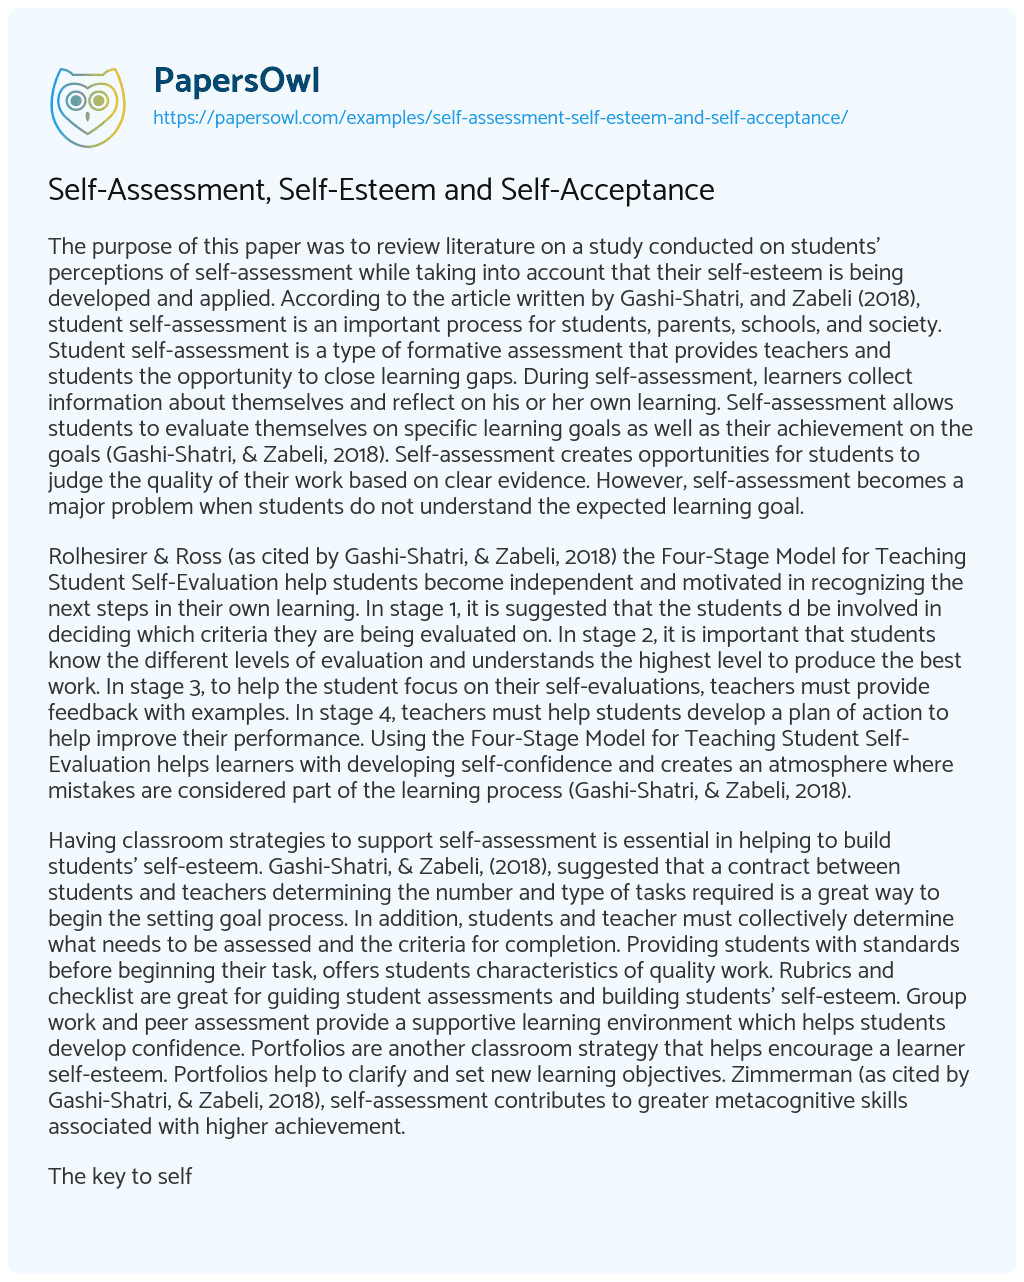 Essay on Self-Assessment, Self-Esteem and Self-Acceptance